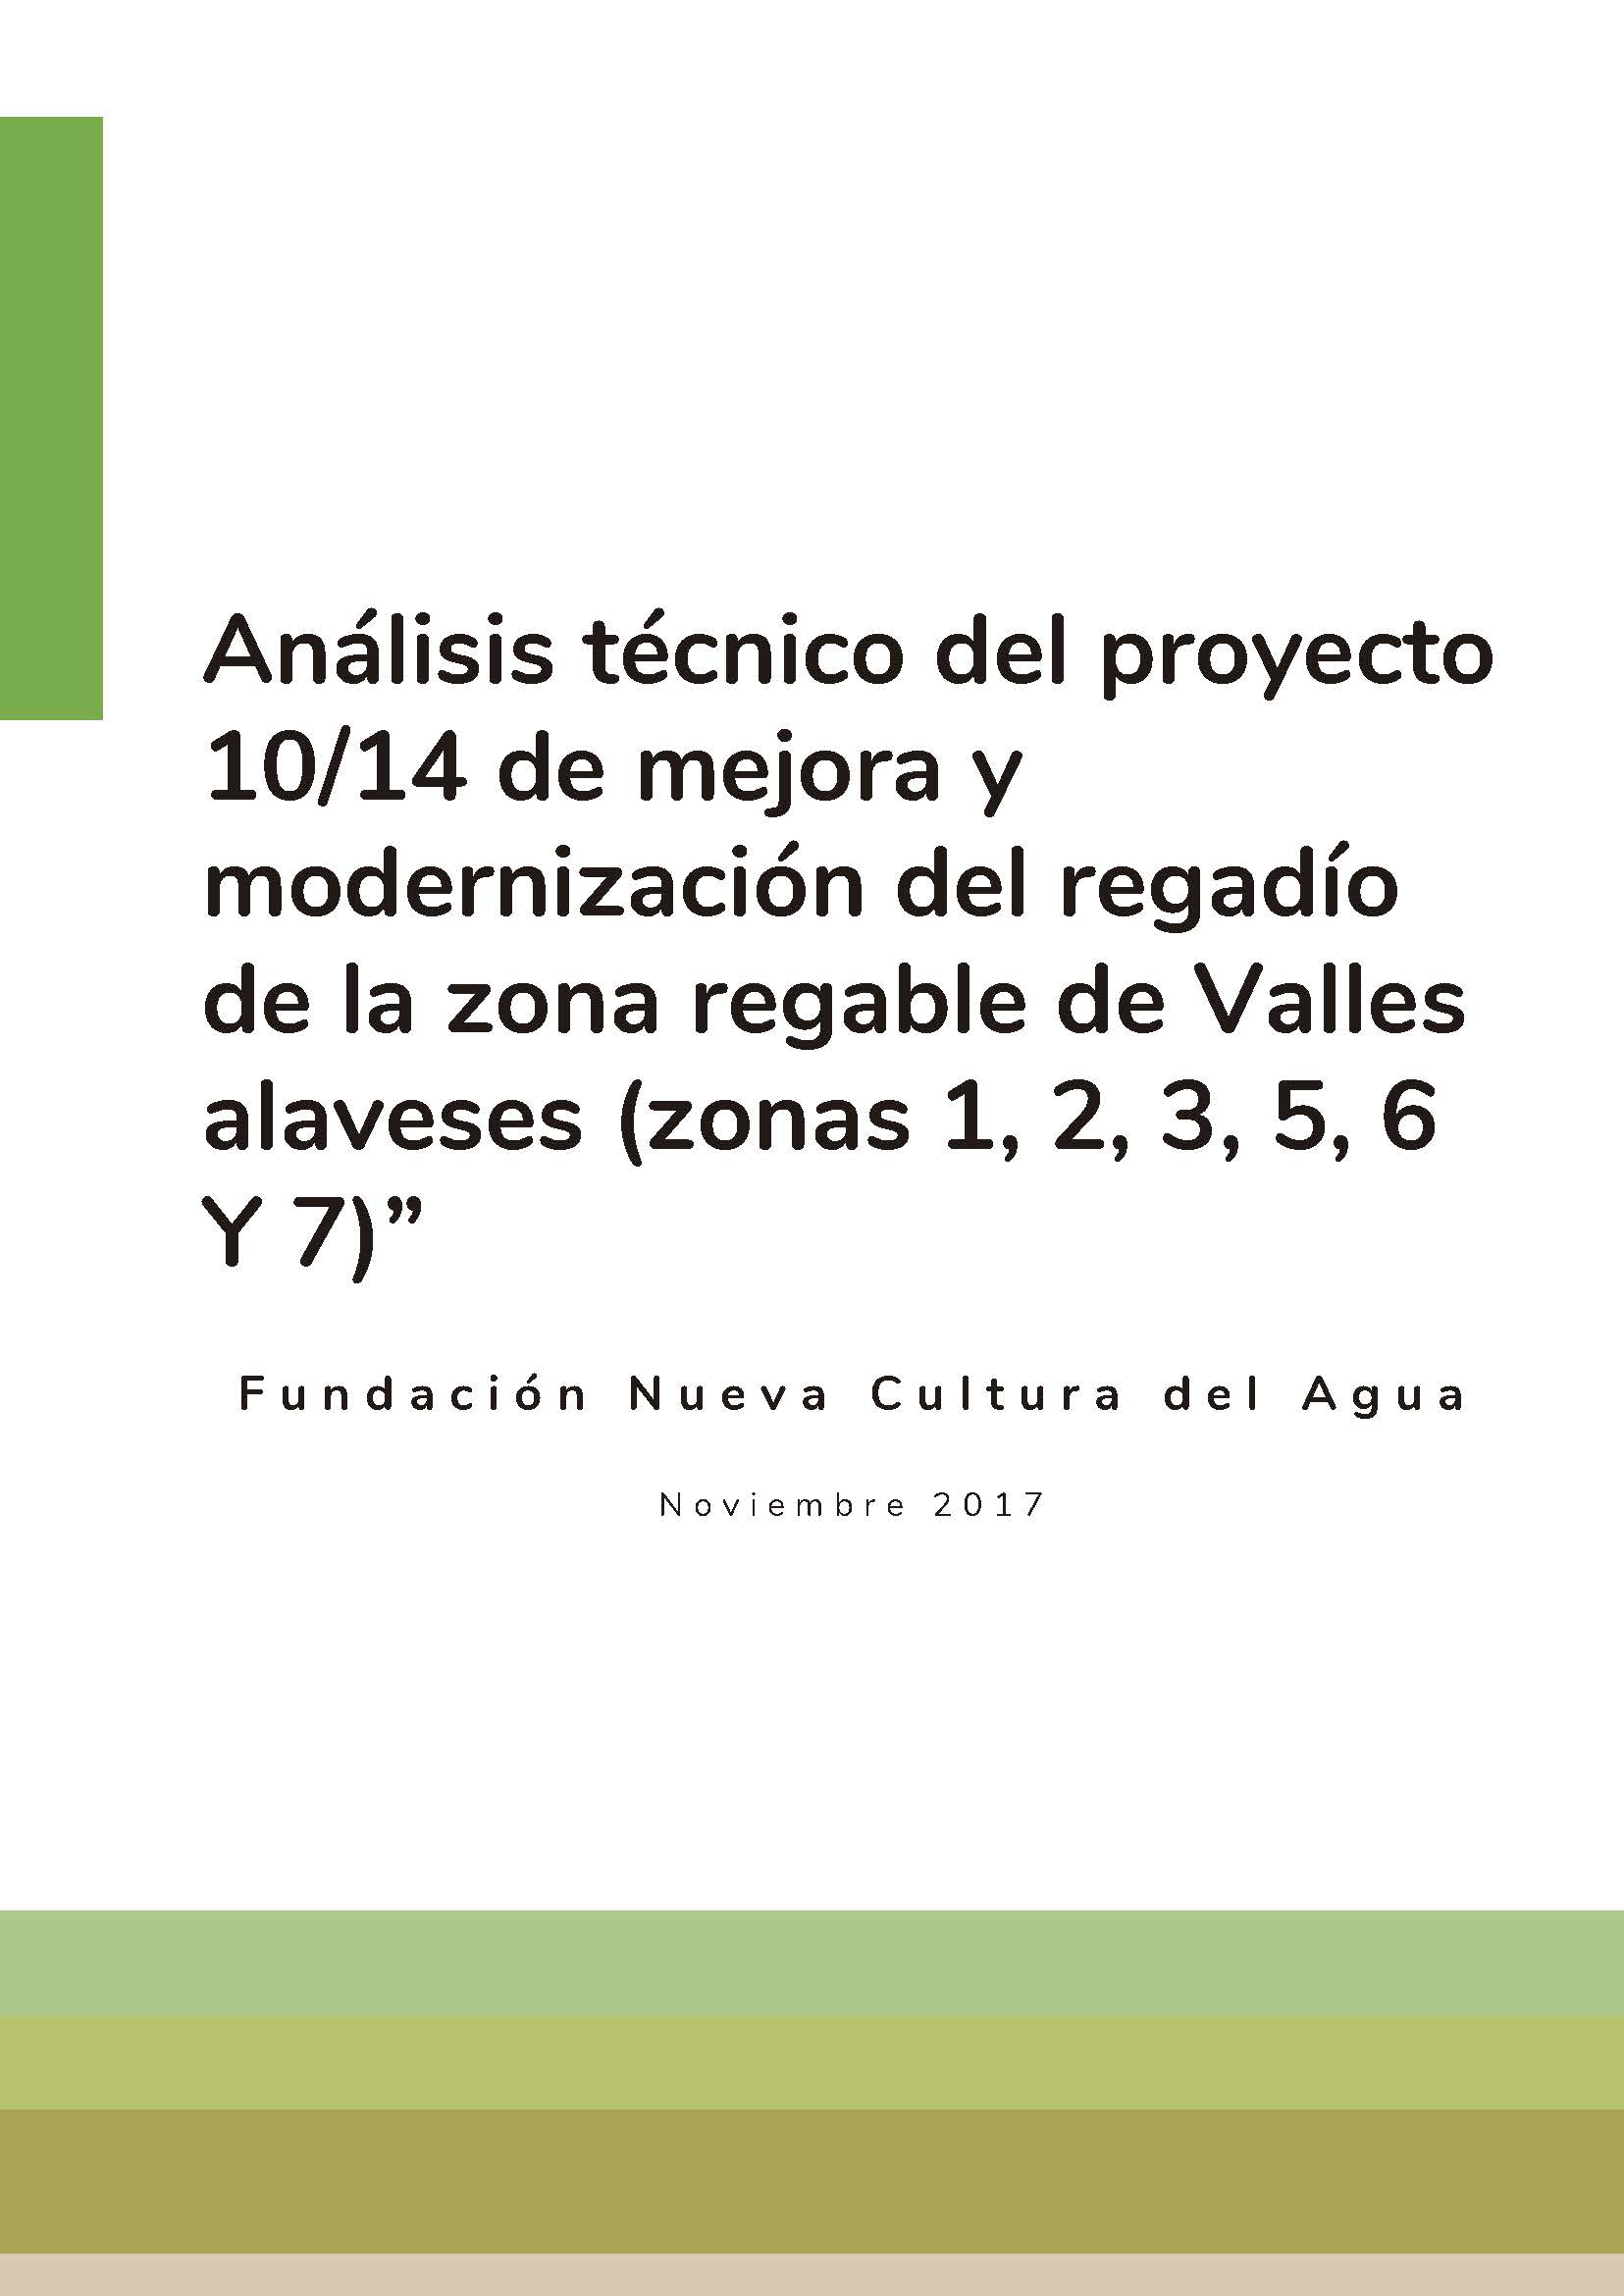 Análisis técnico del proyecto de modernización de regadíos en Valles Alaveses